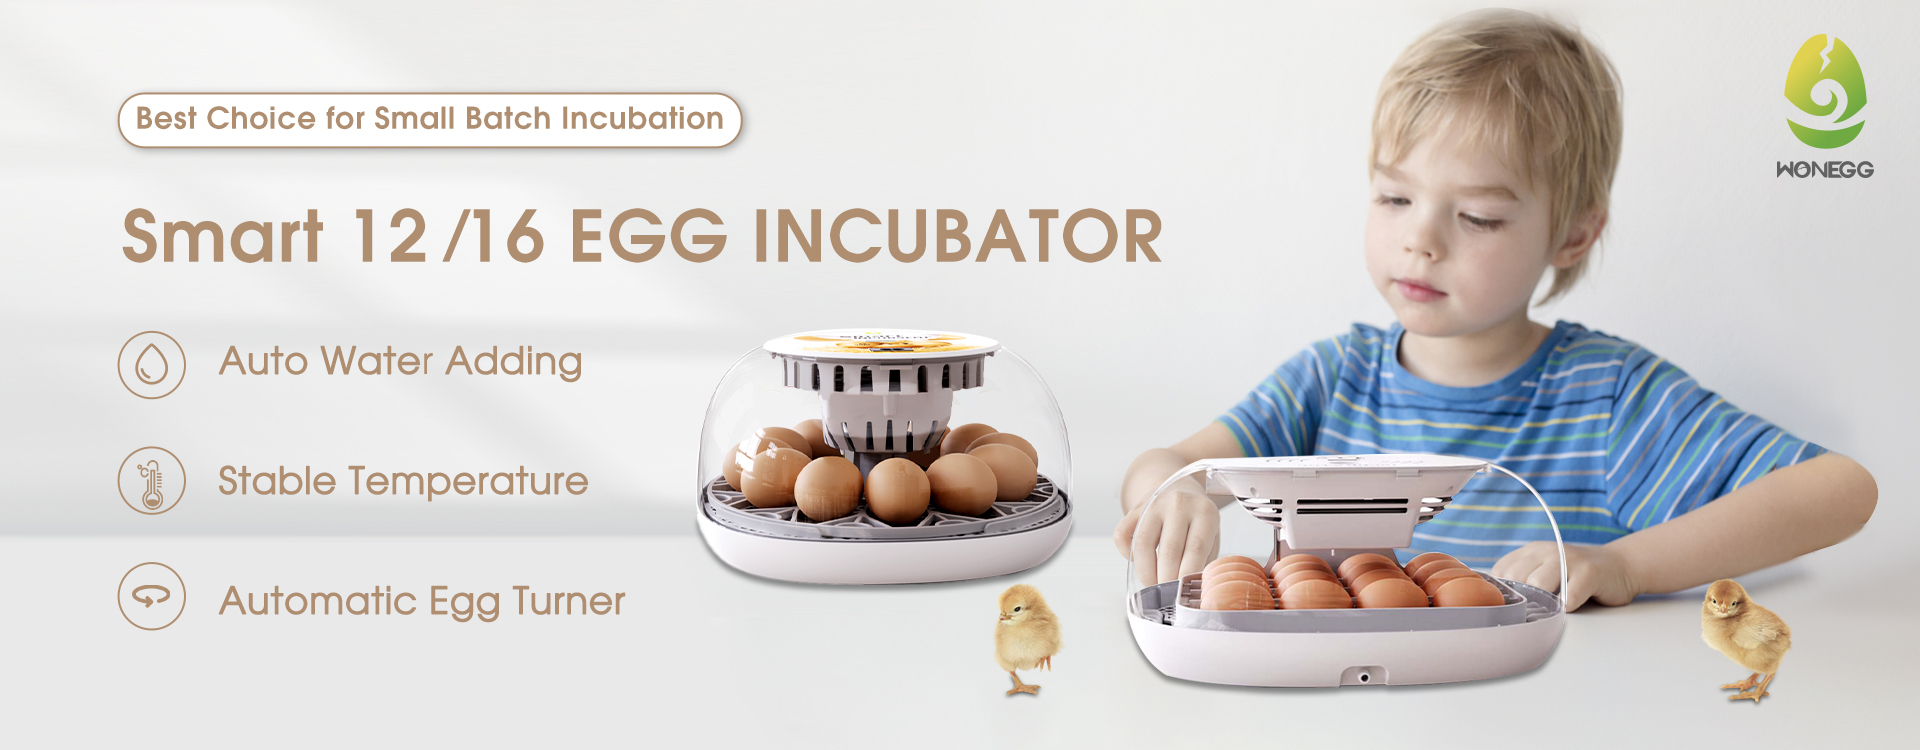 https://www.incubatoregg.com/wonegg-automatic-temperature-control-multi-function-egg-tray-for-12-eggs-incubator-product/